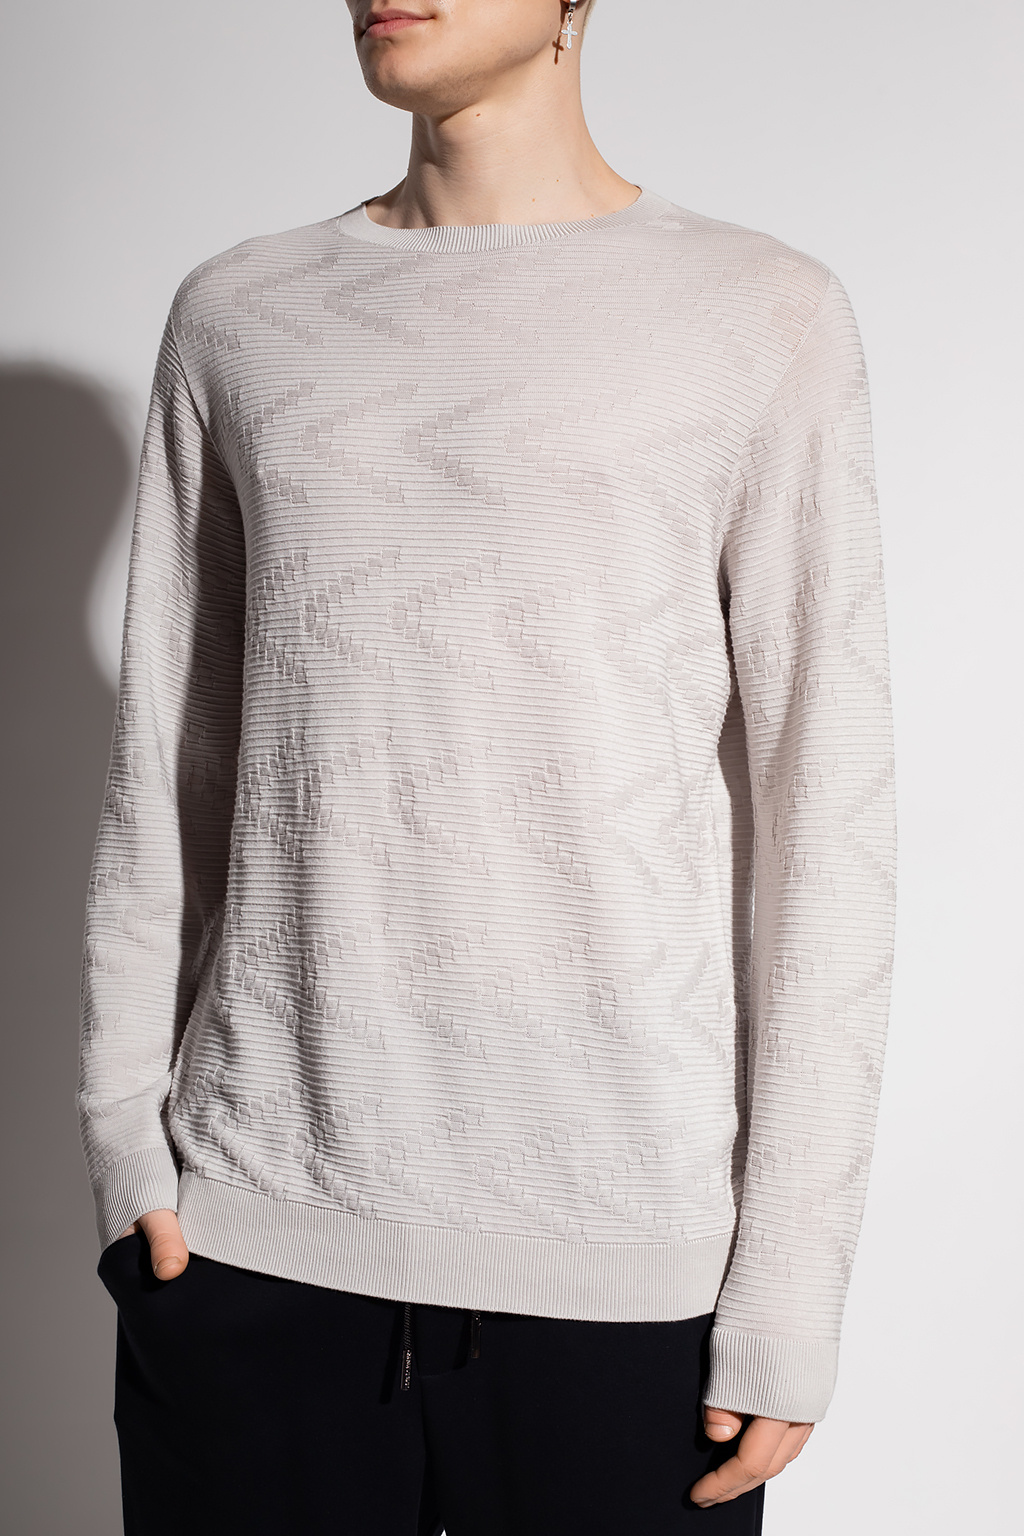 Giorgio knitted armani Ribbed sweater